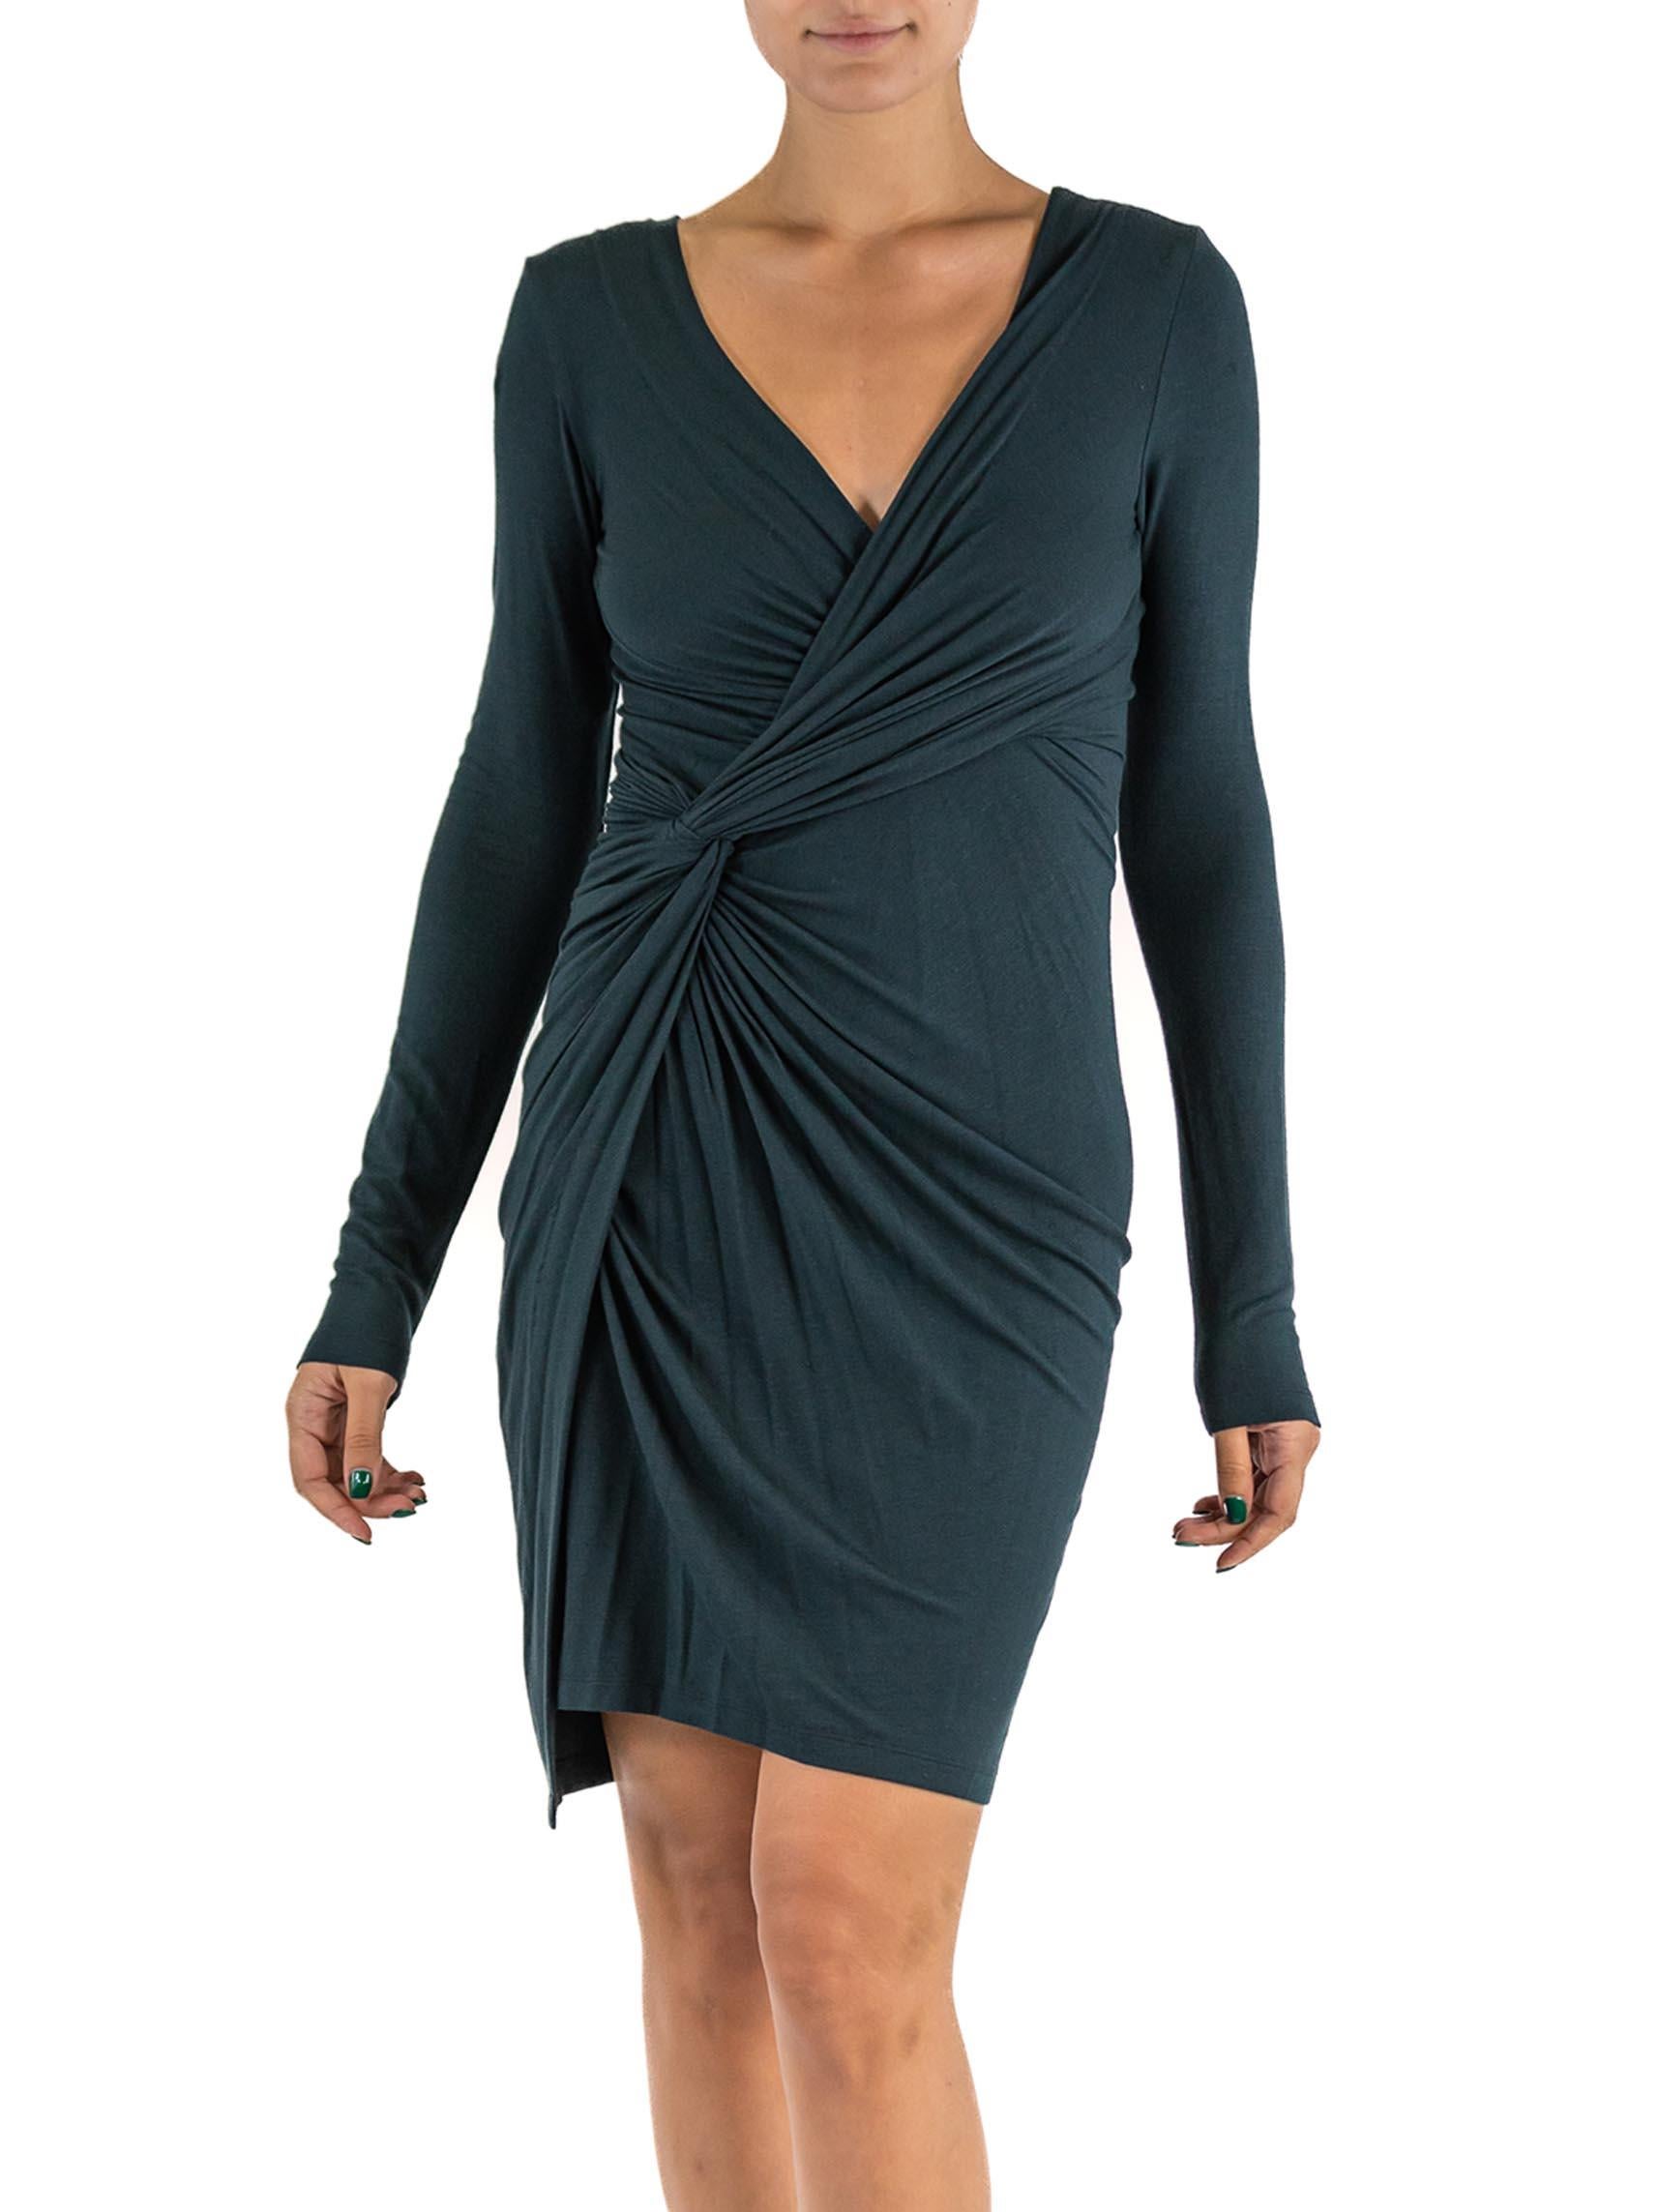 2000S DONNA KARAN Dark Teal Rayon & Lycra Jersey Deep V Neck Dress With Sleeves For Sale 1